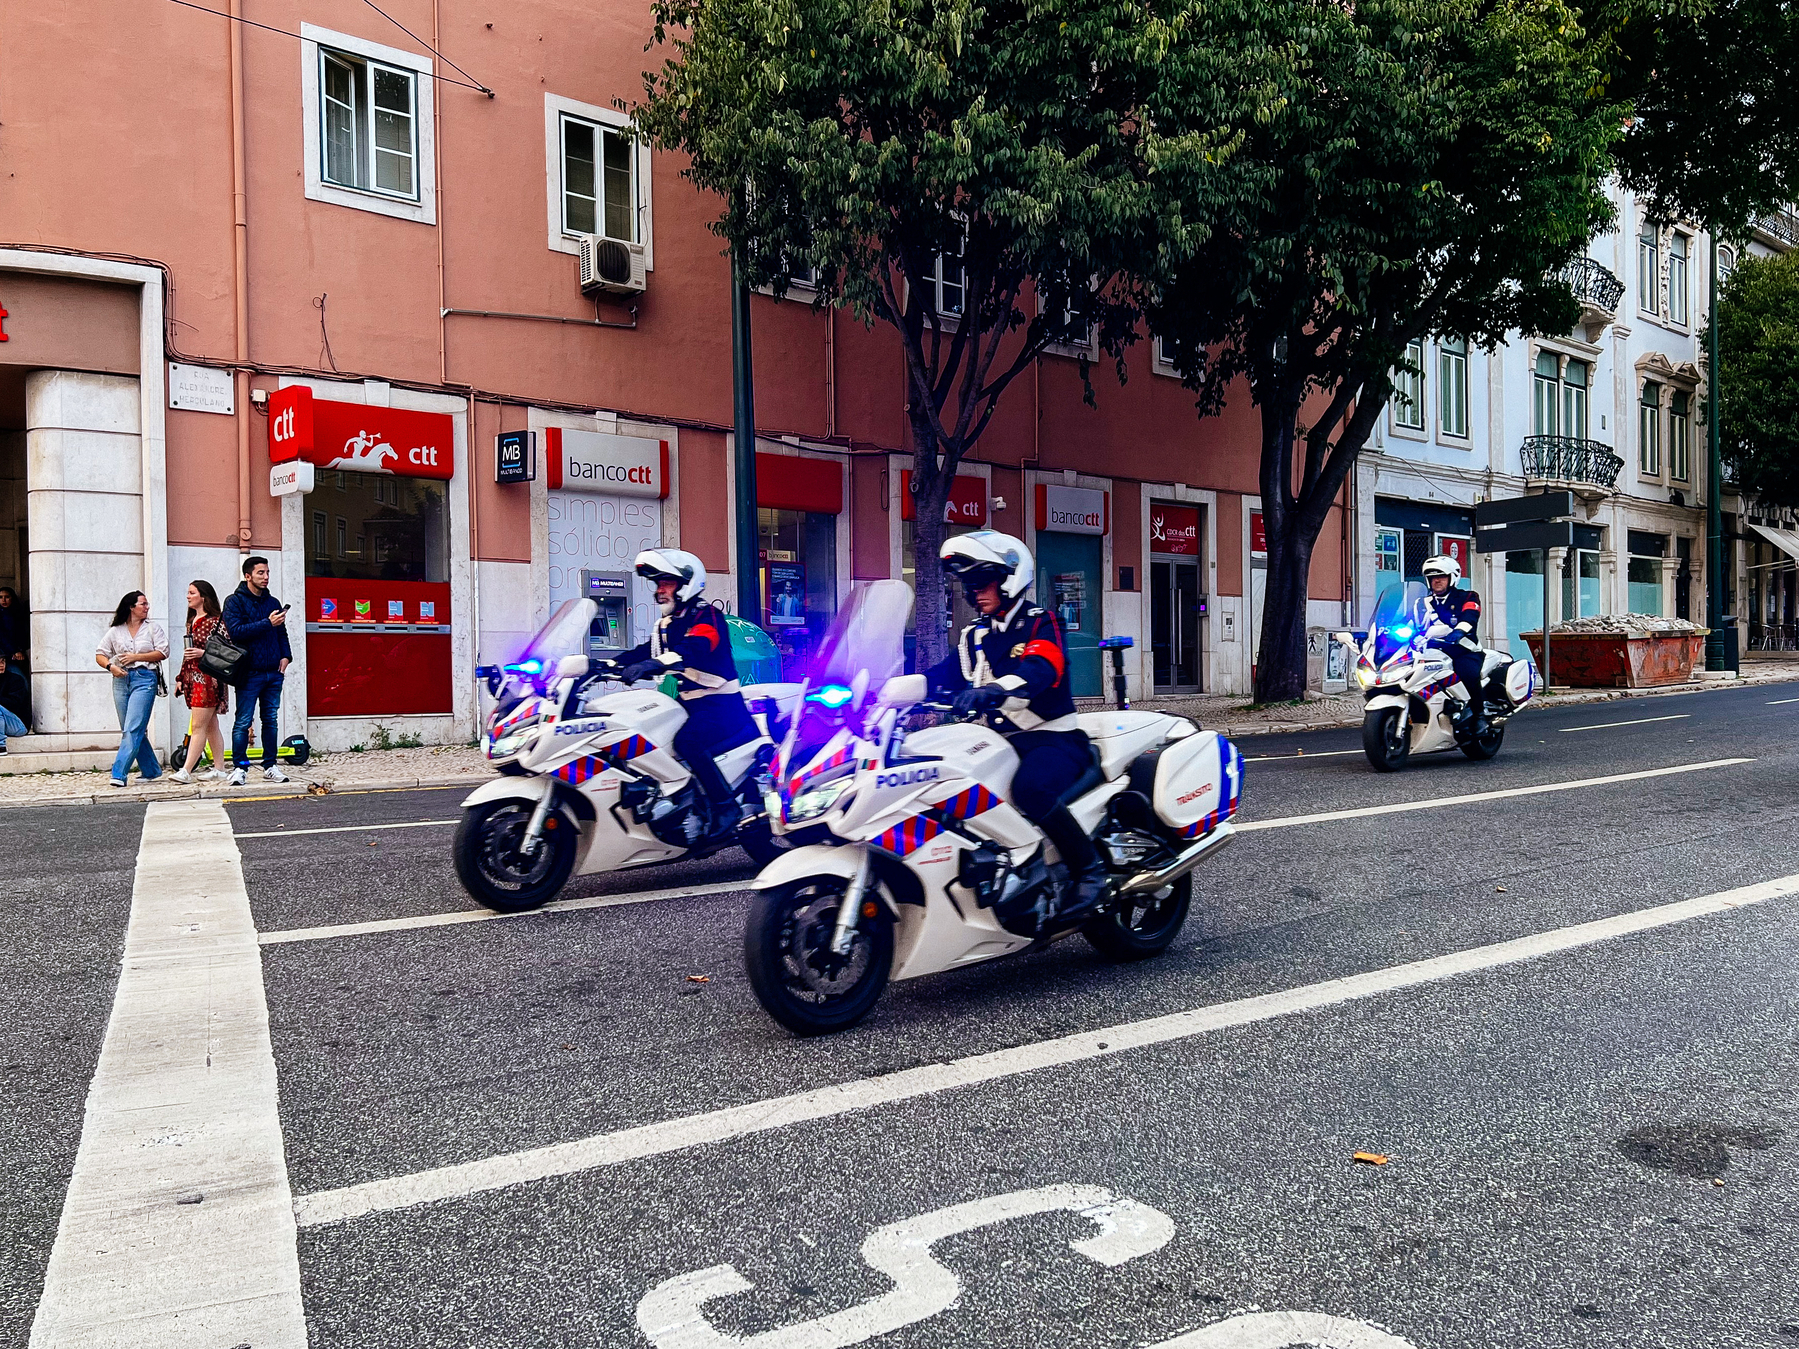 three policemen on motorcycles riding through town